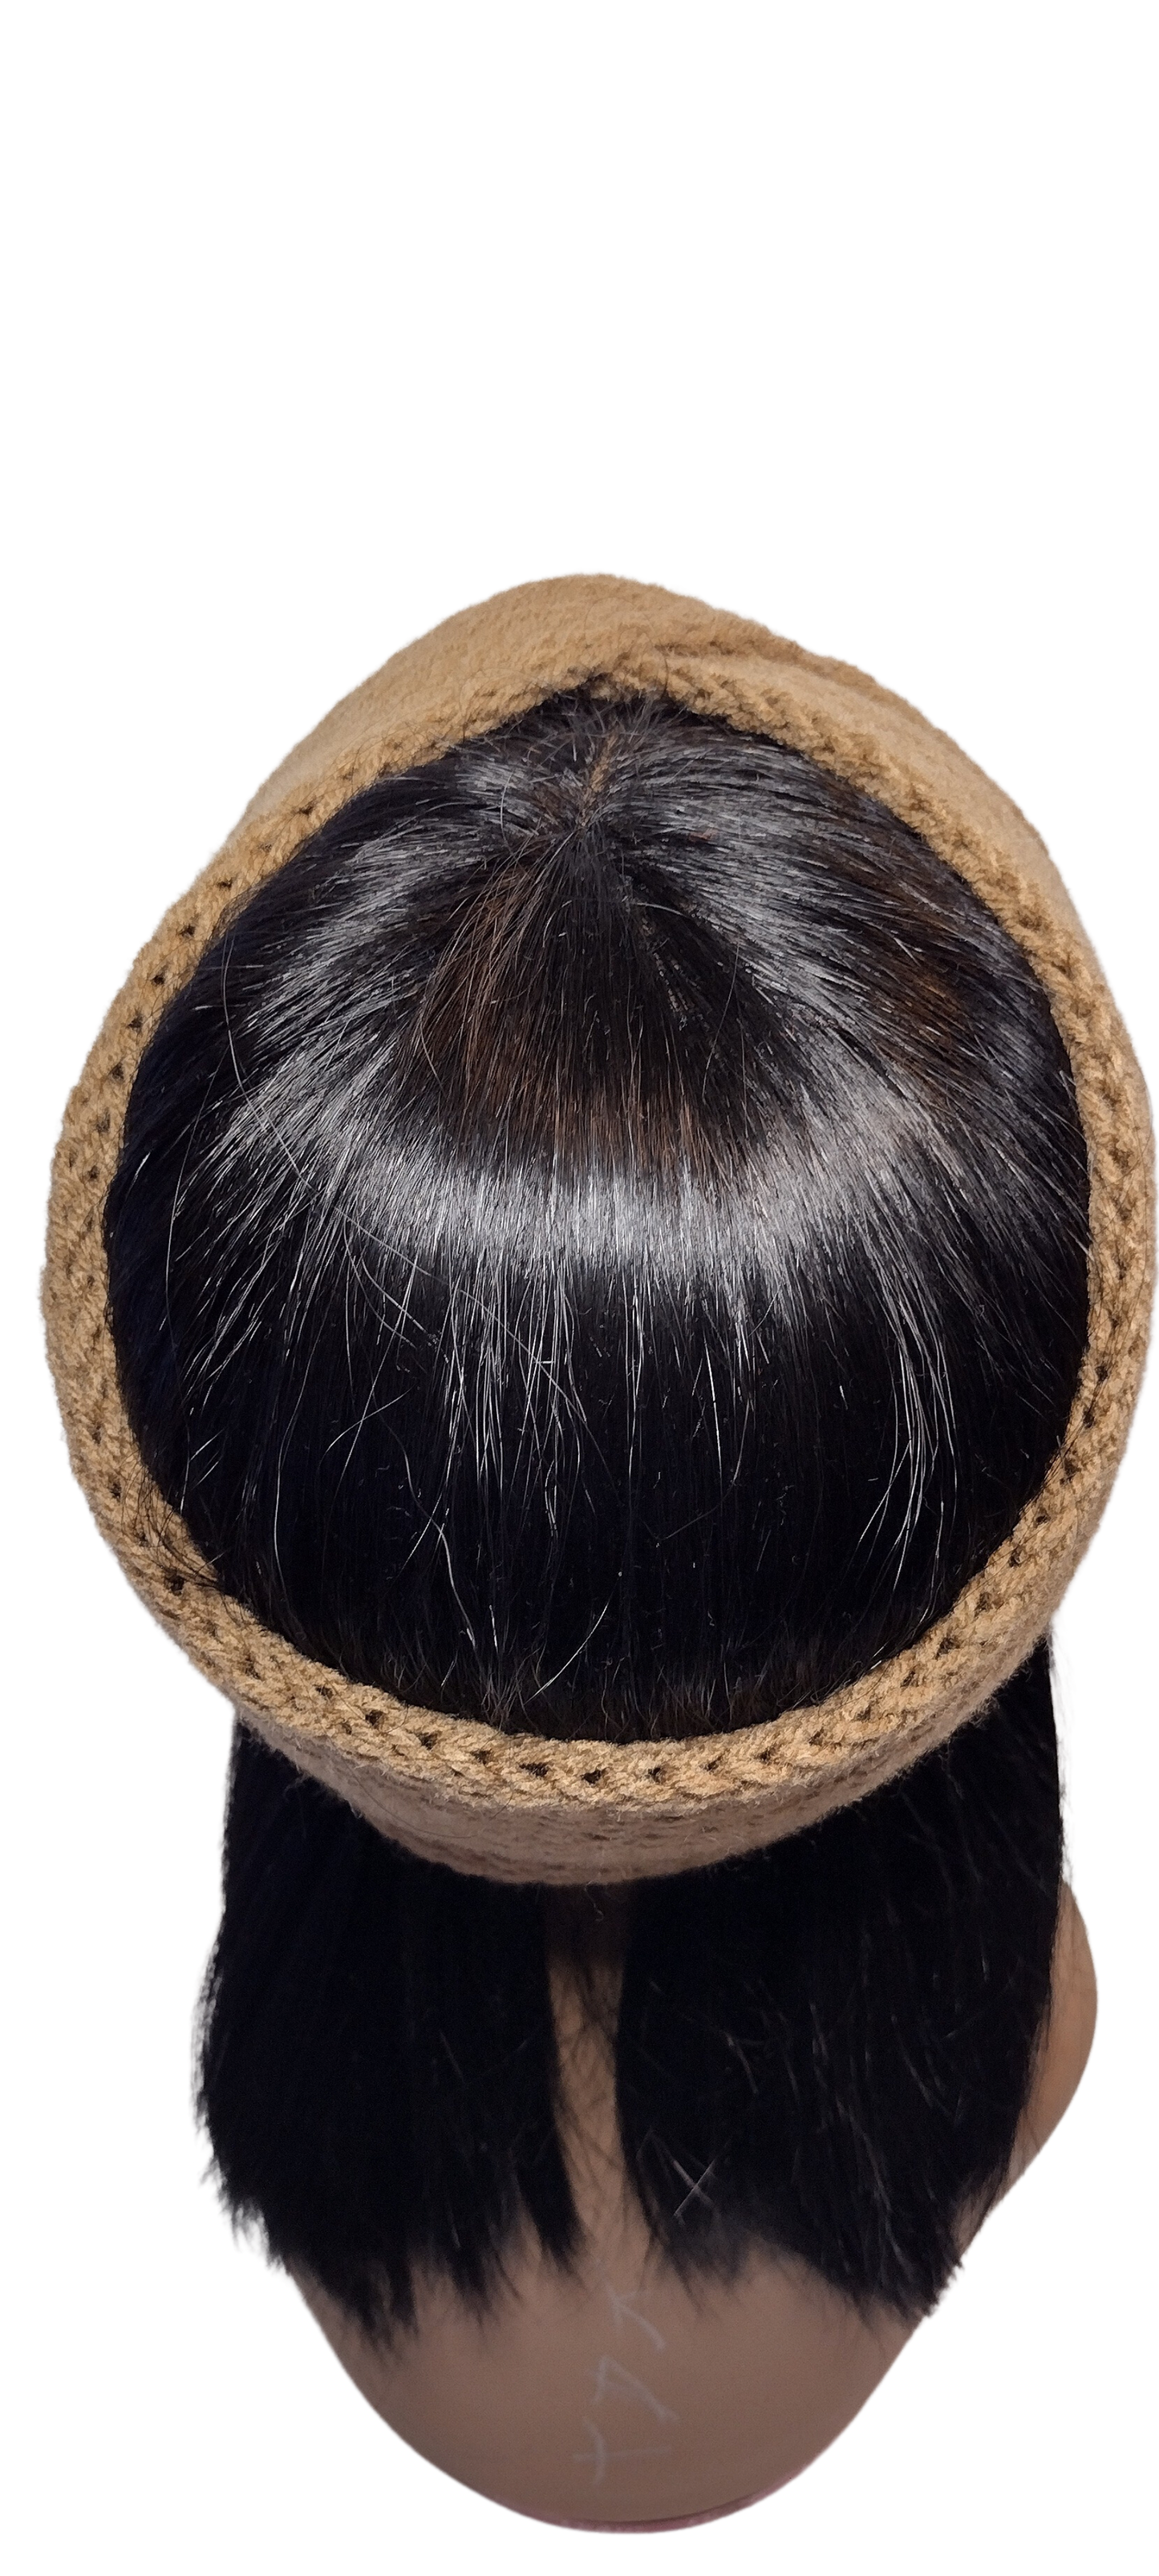 Blk Lotus Co Café Brown Twist Knit Headband: Warmth Meets Elegance